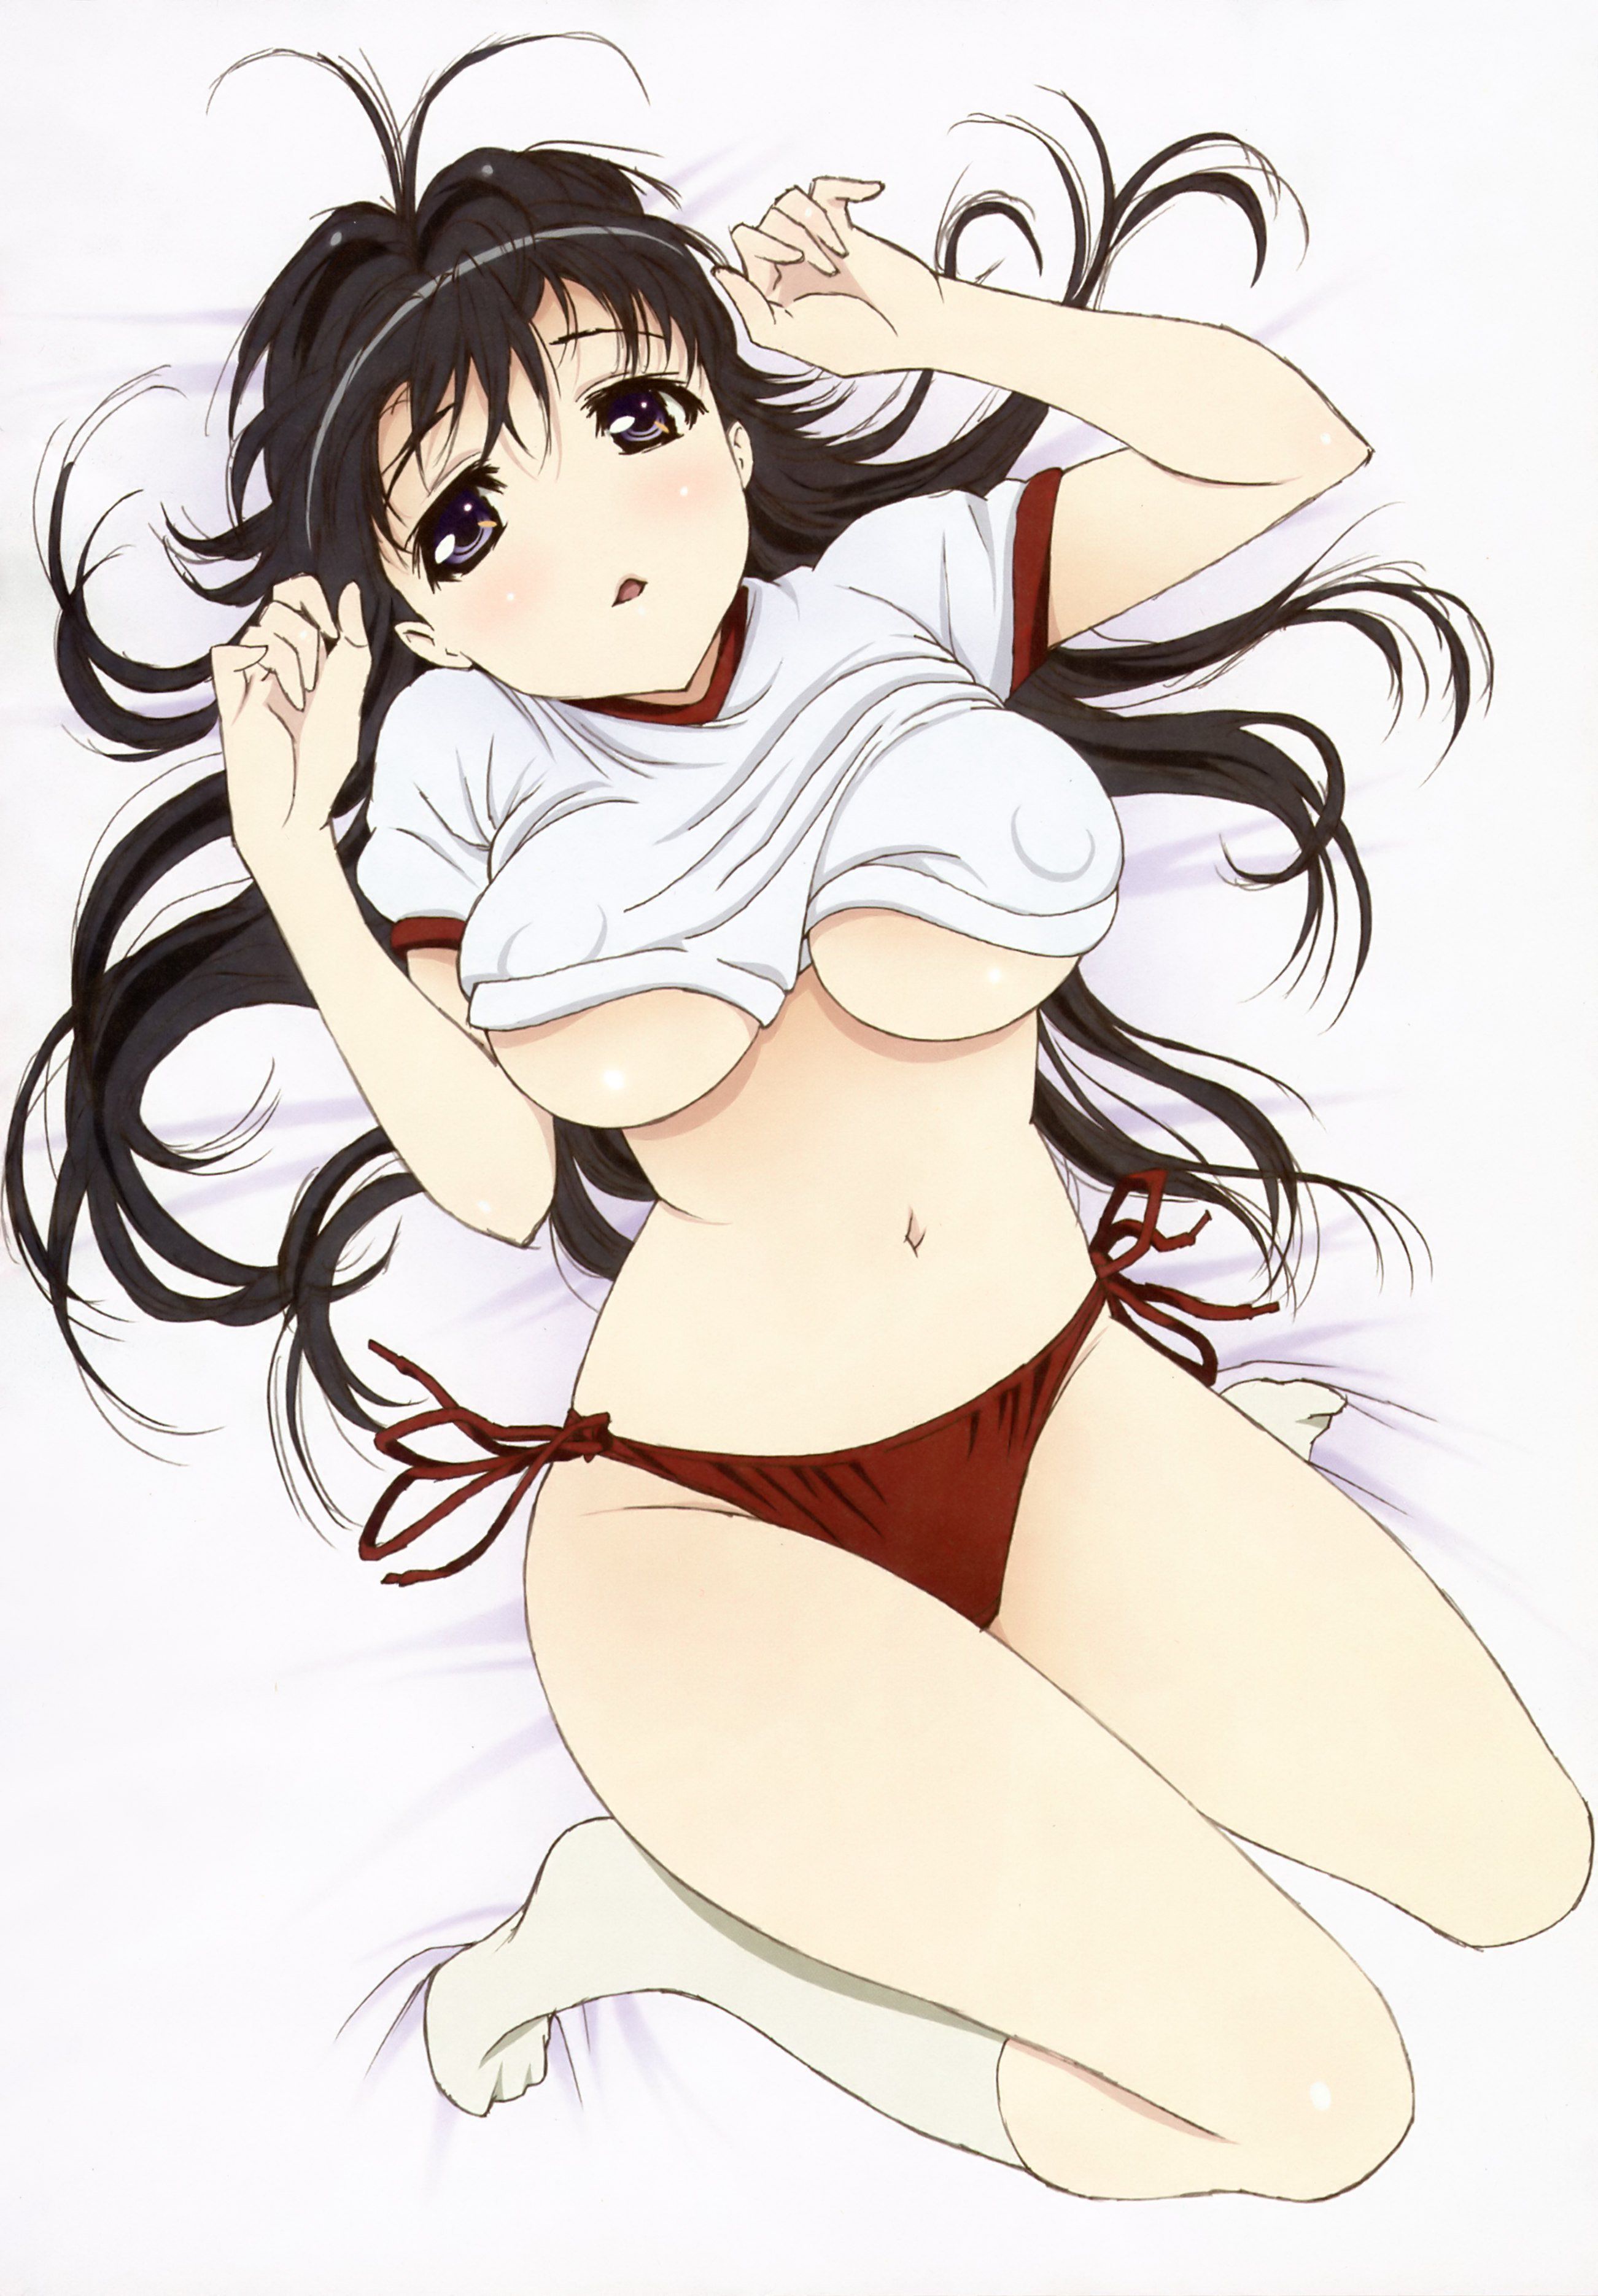 [Kanokon] Source Chizuru-chan and heroine erotic images part3 24